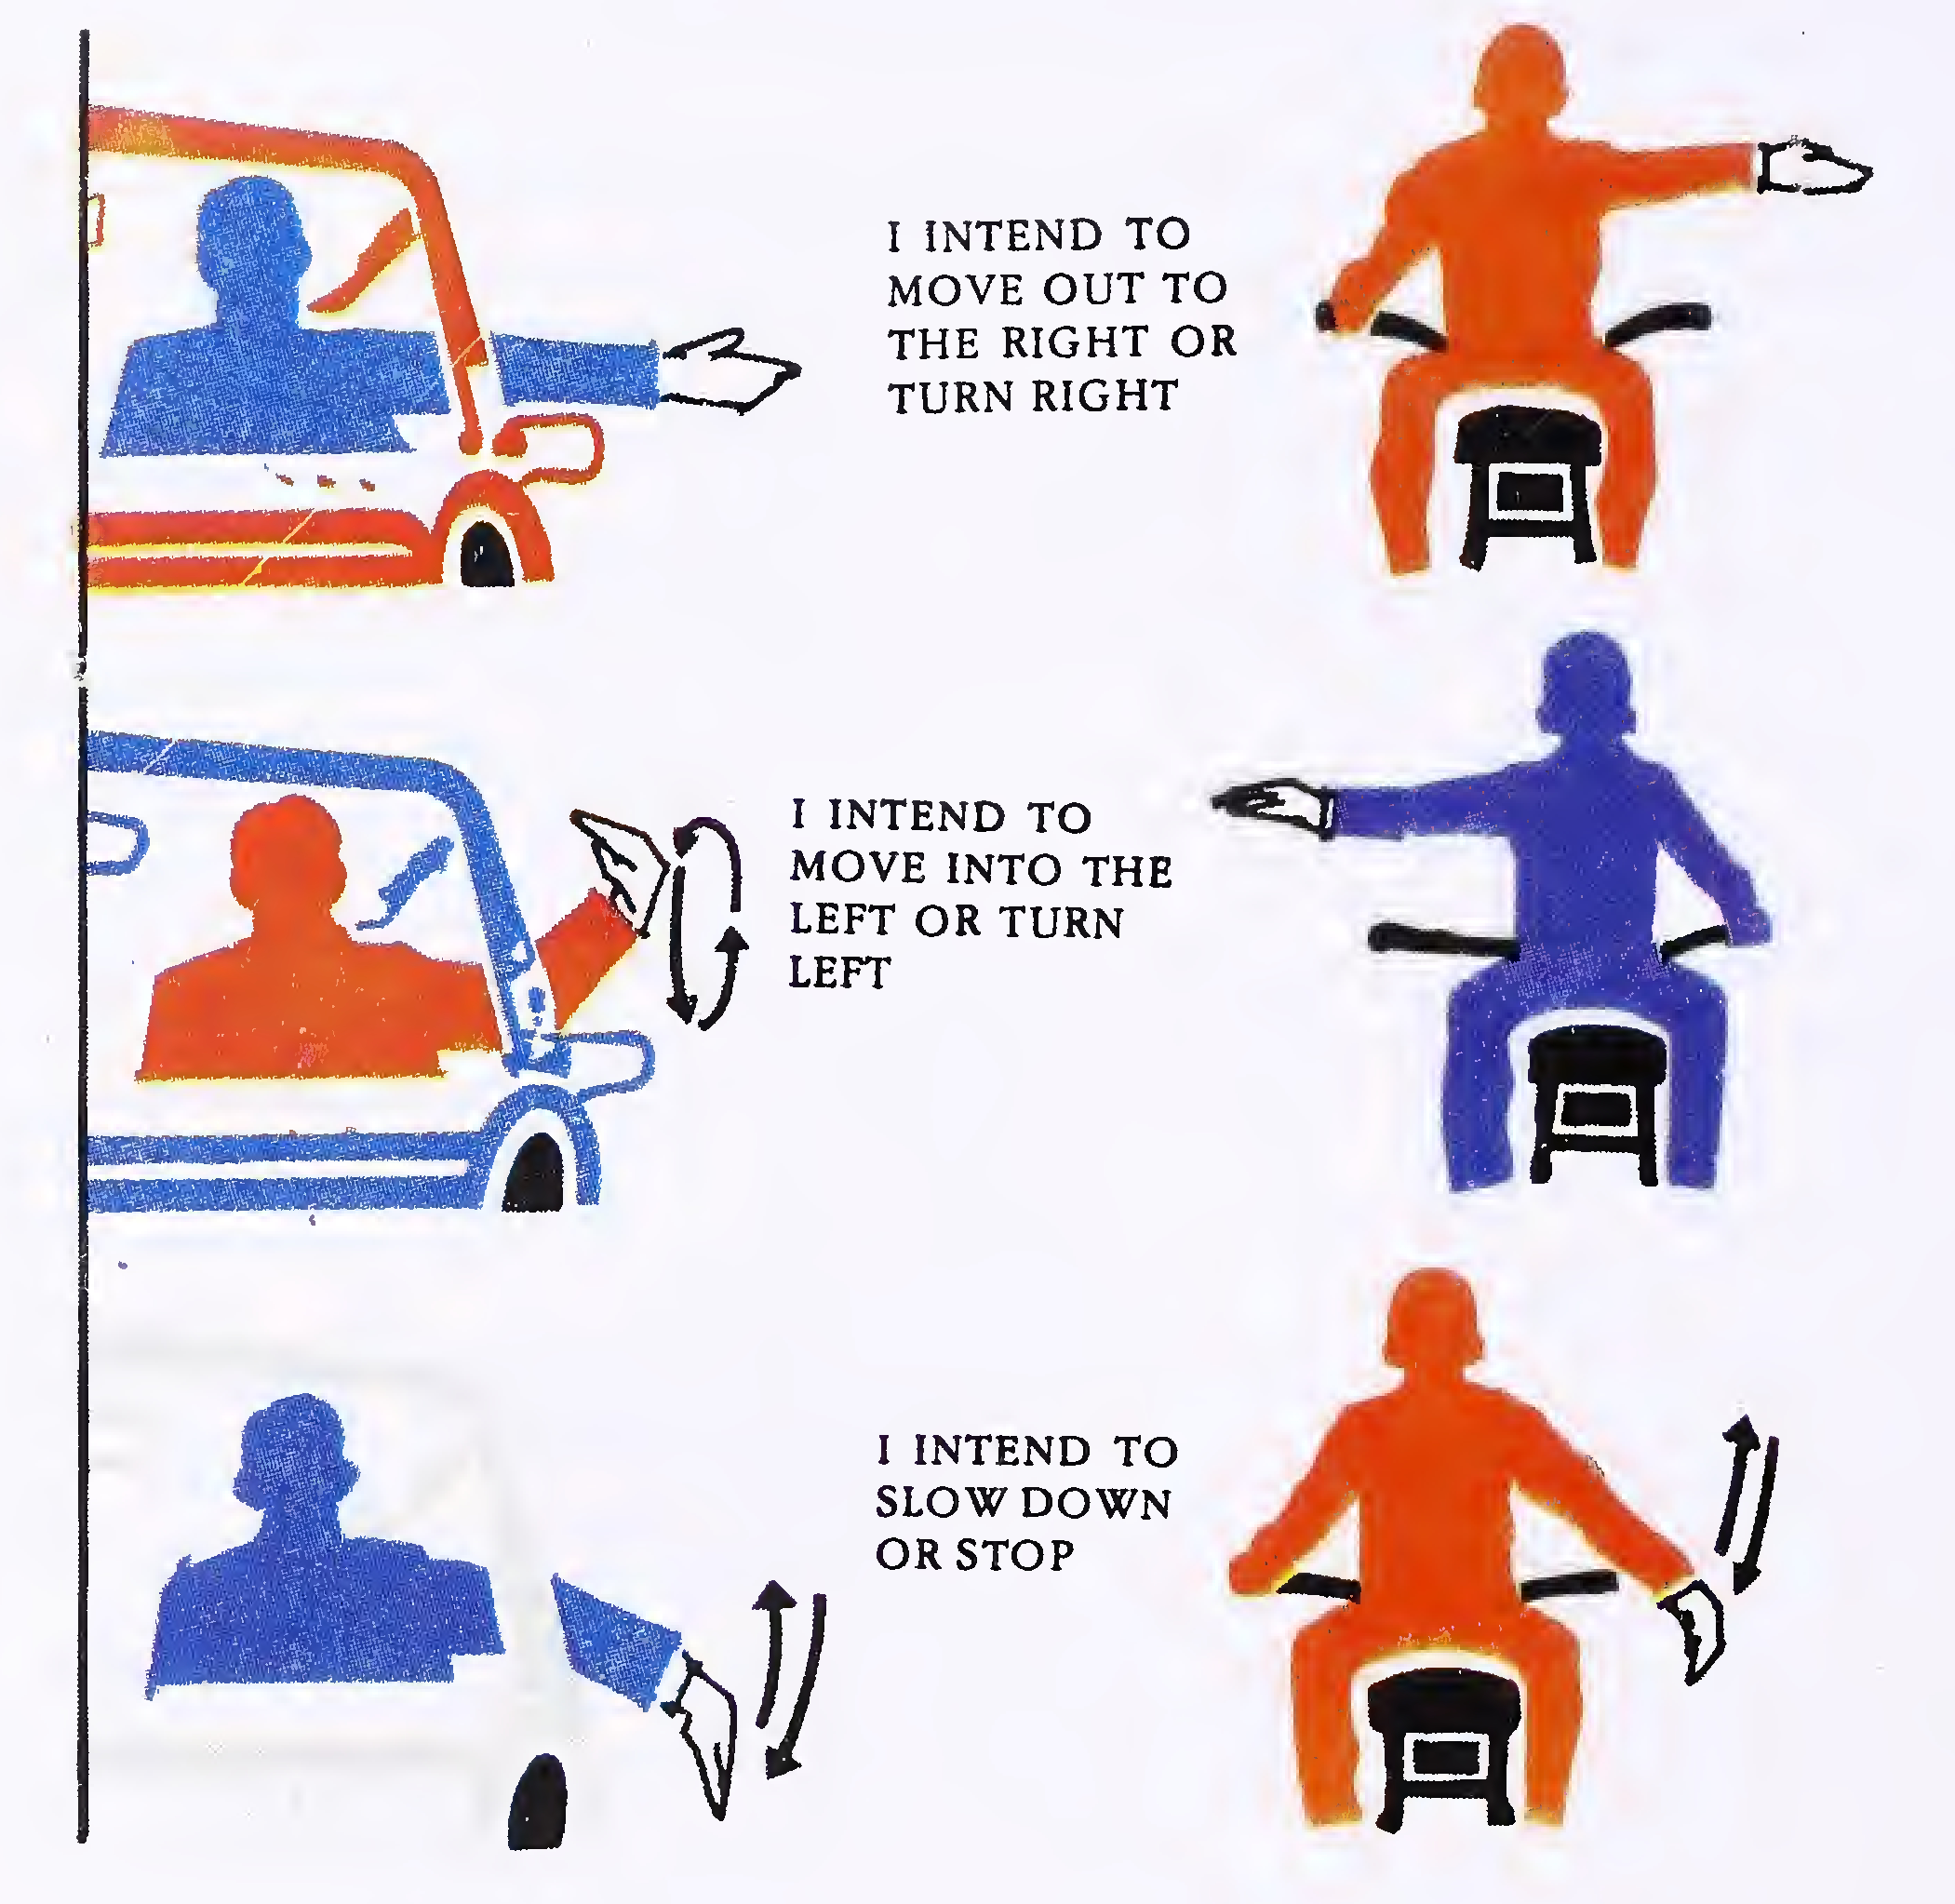 california driving test hand signals